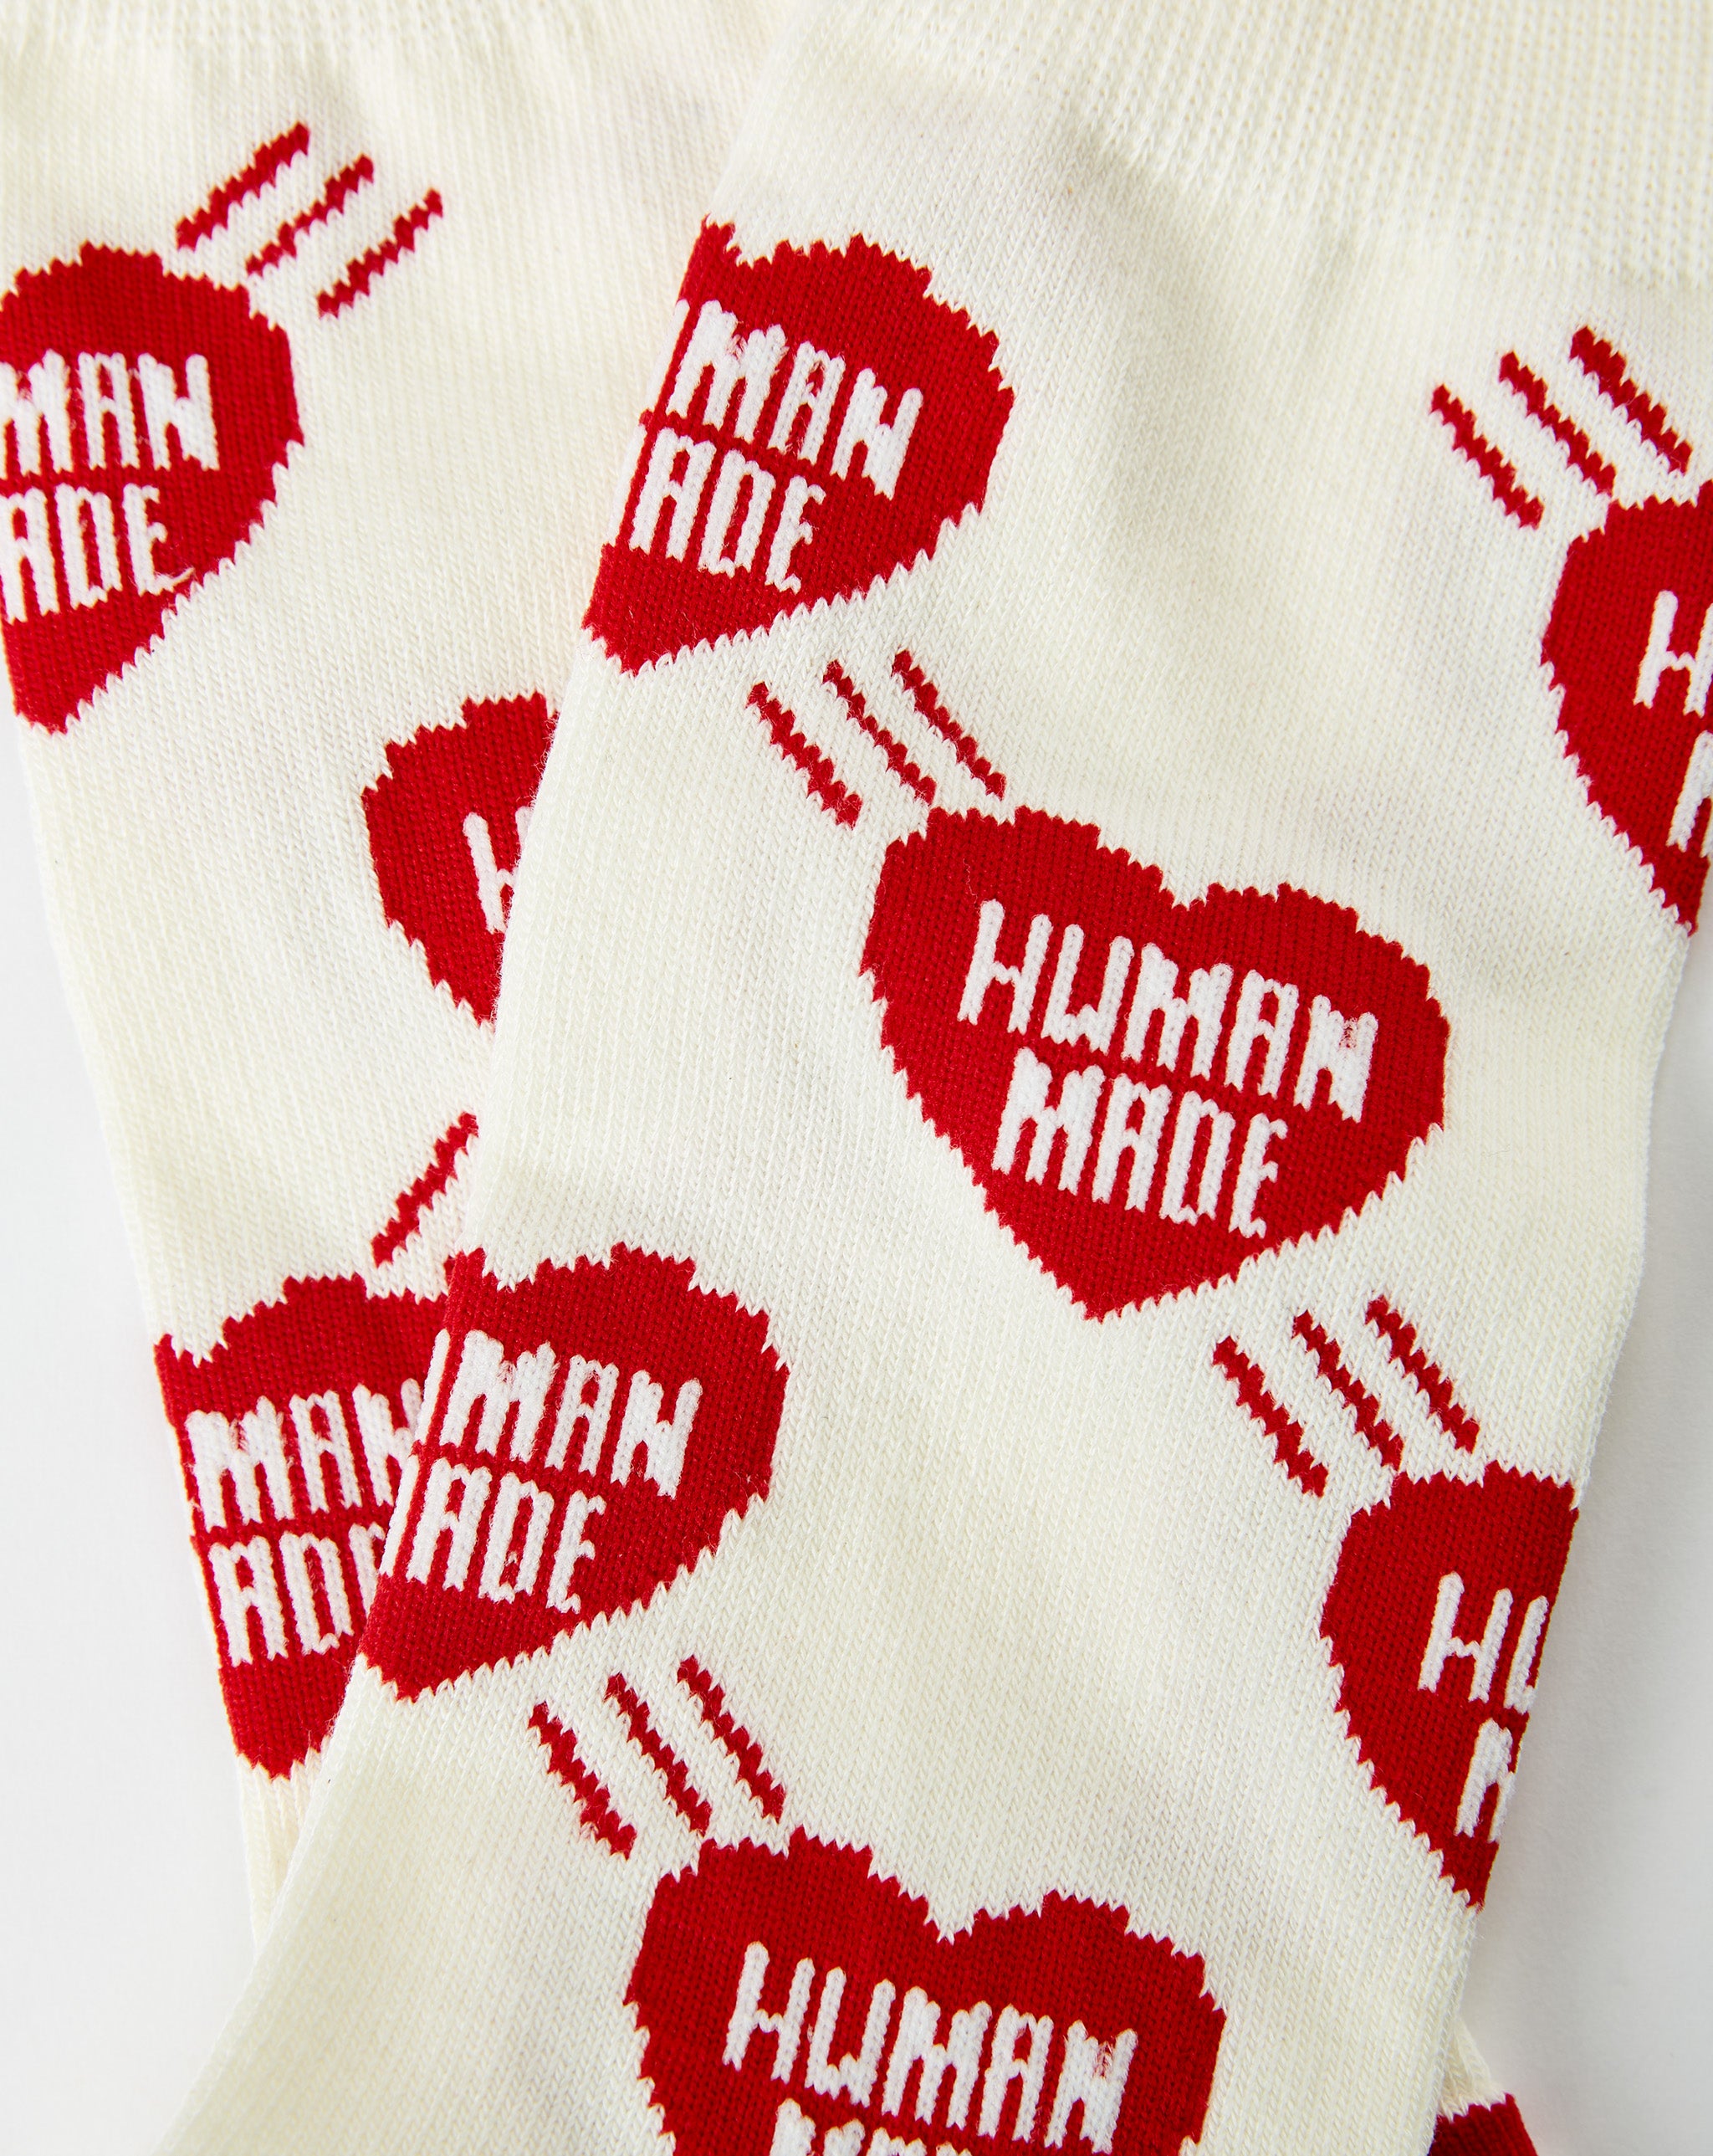 Human Made Heart Socks  - XHIBITION